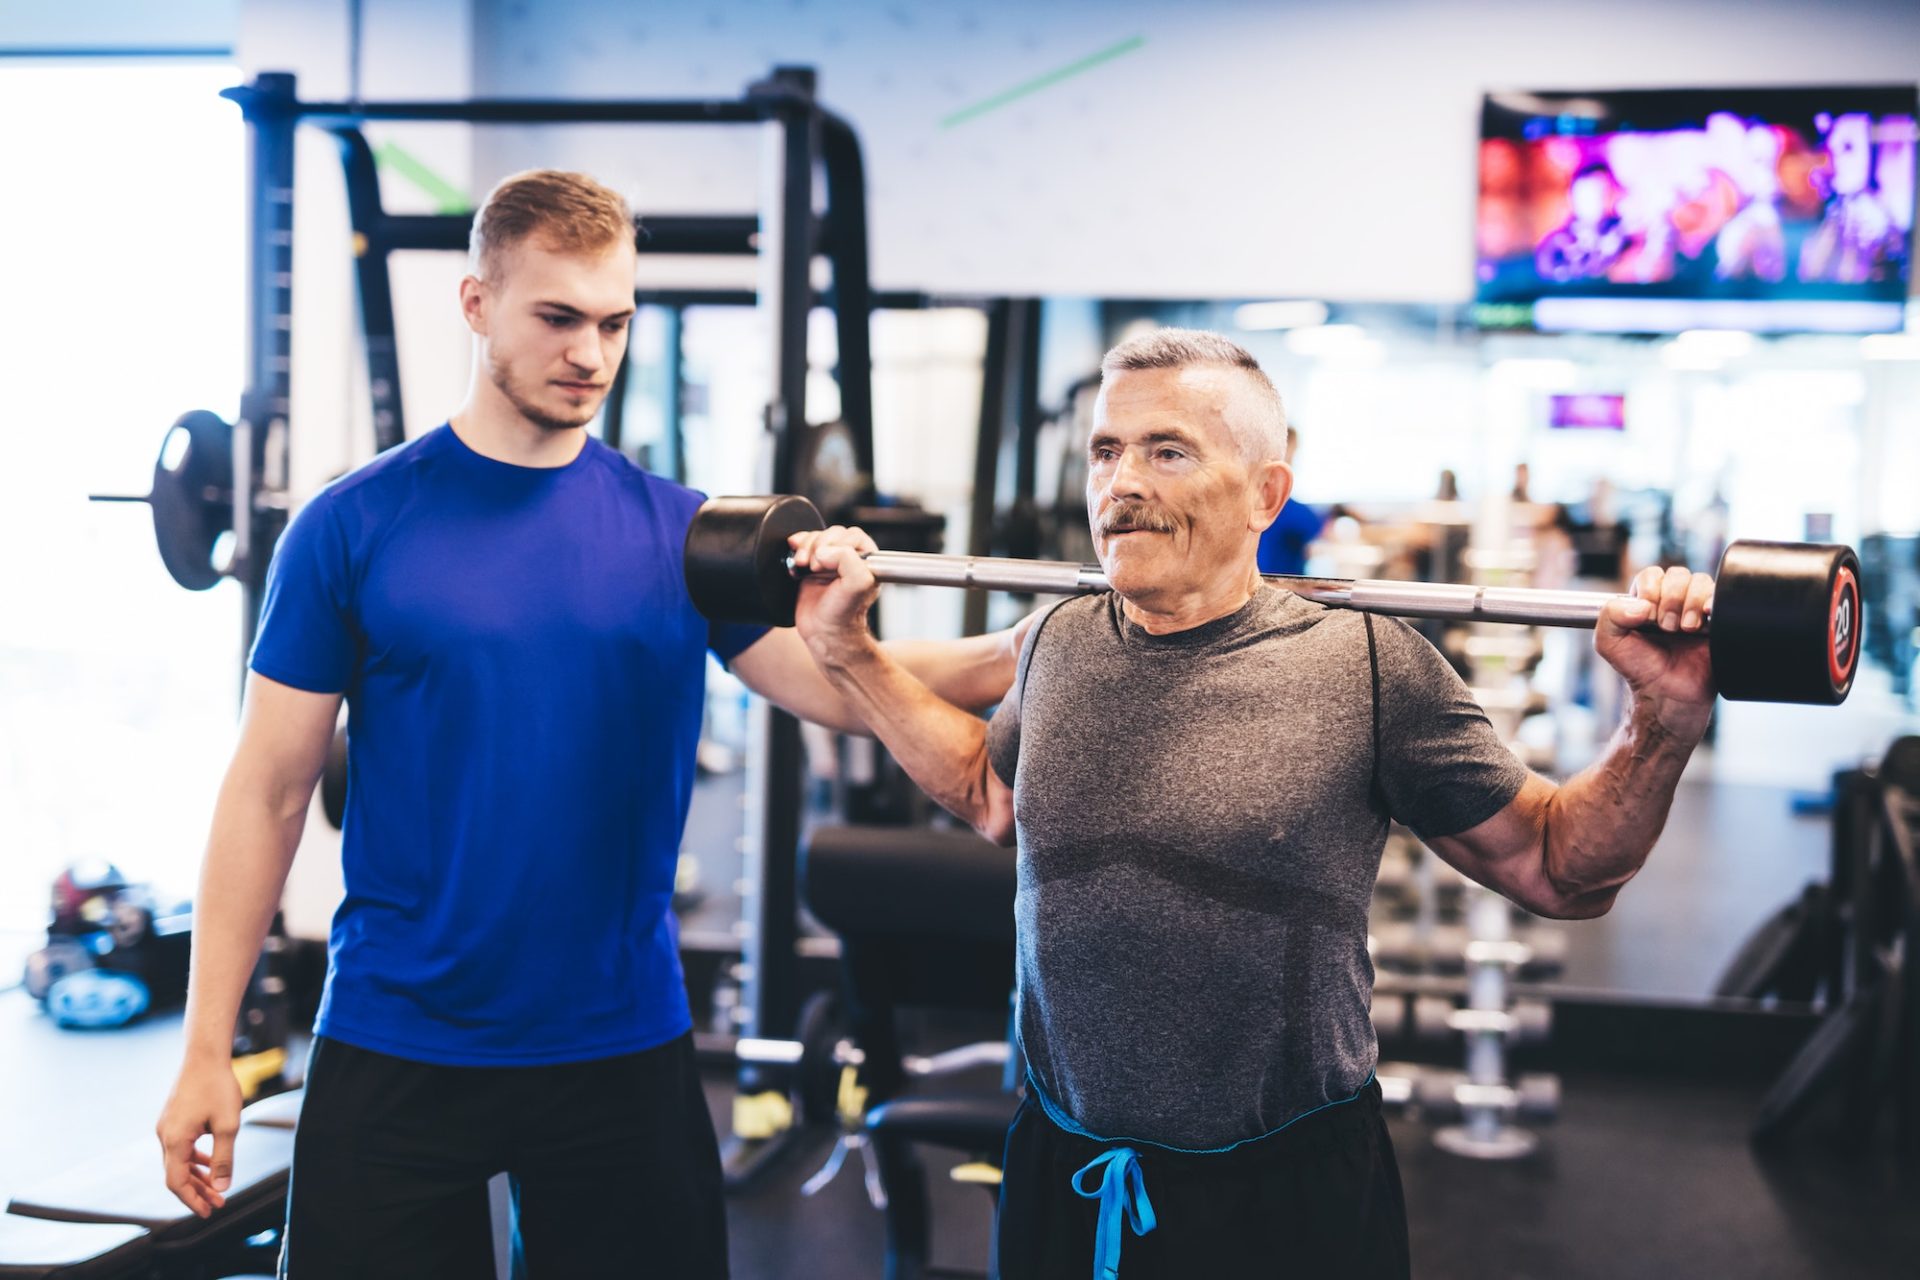 Older man assisting senior man at the gym.